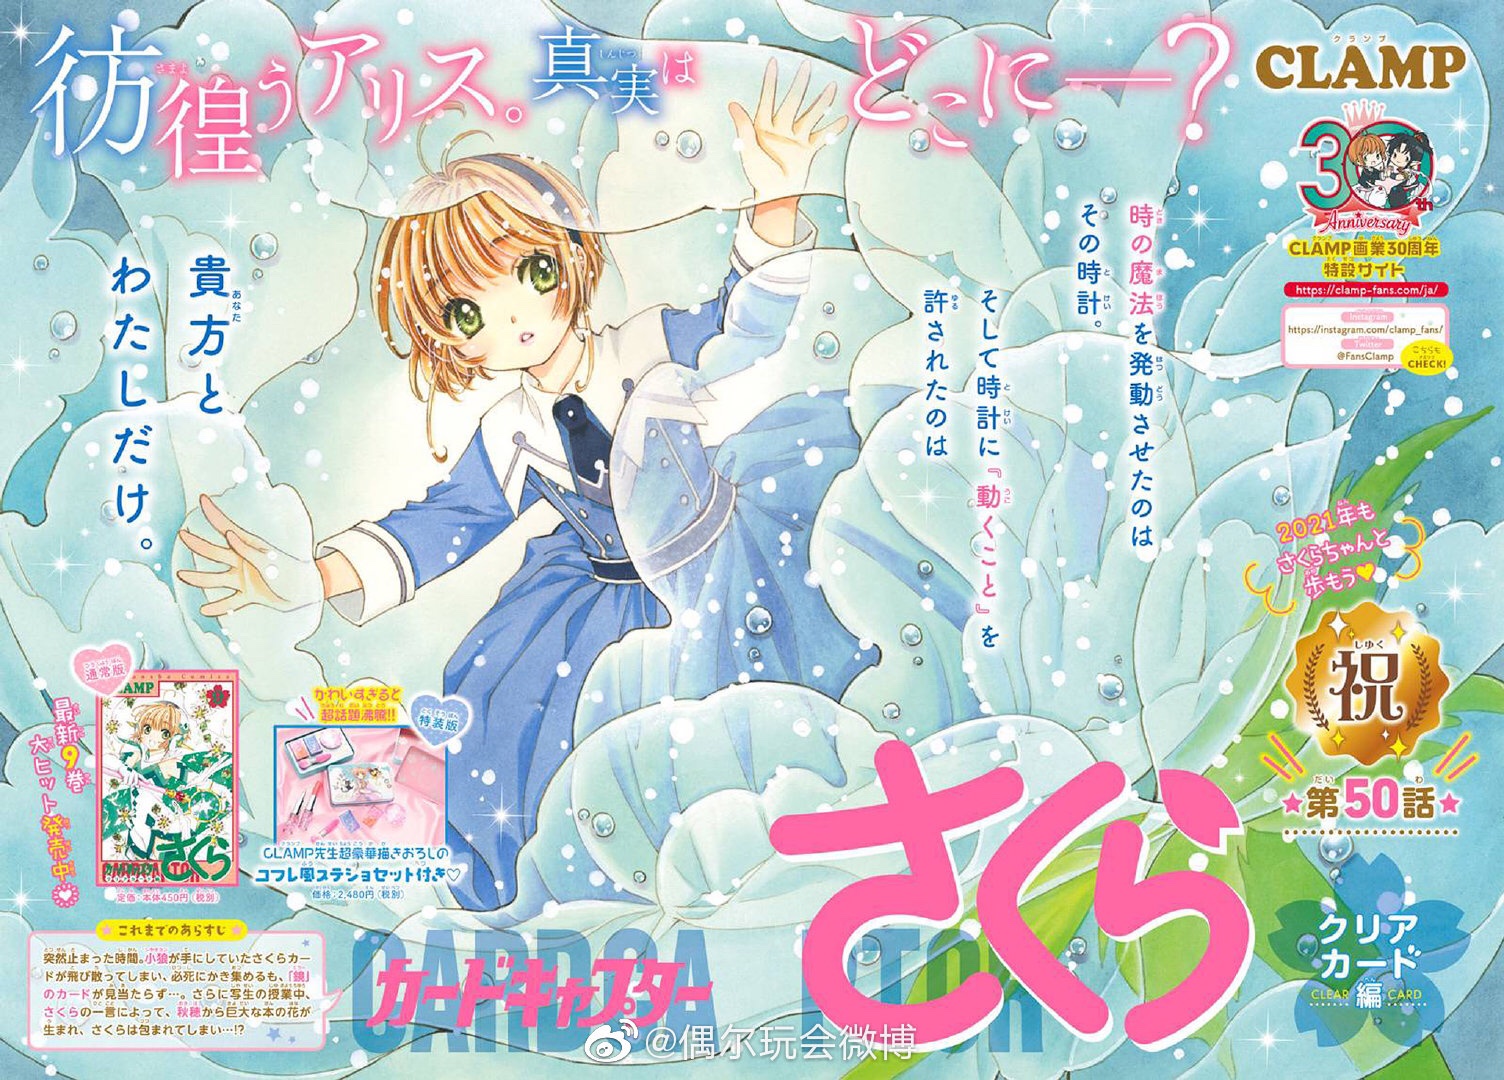 Cardcaptor Sakura et autres mangas [CLAMP] - Page 2 4b796a10